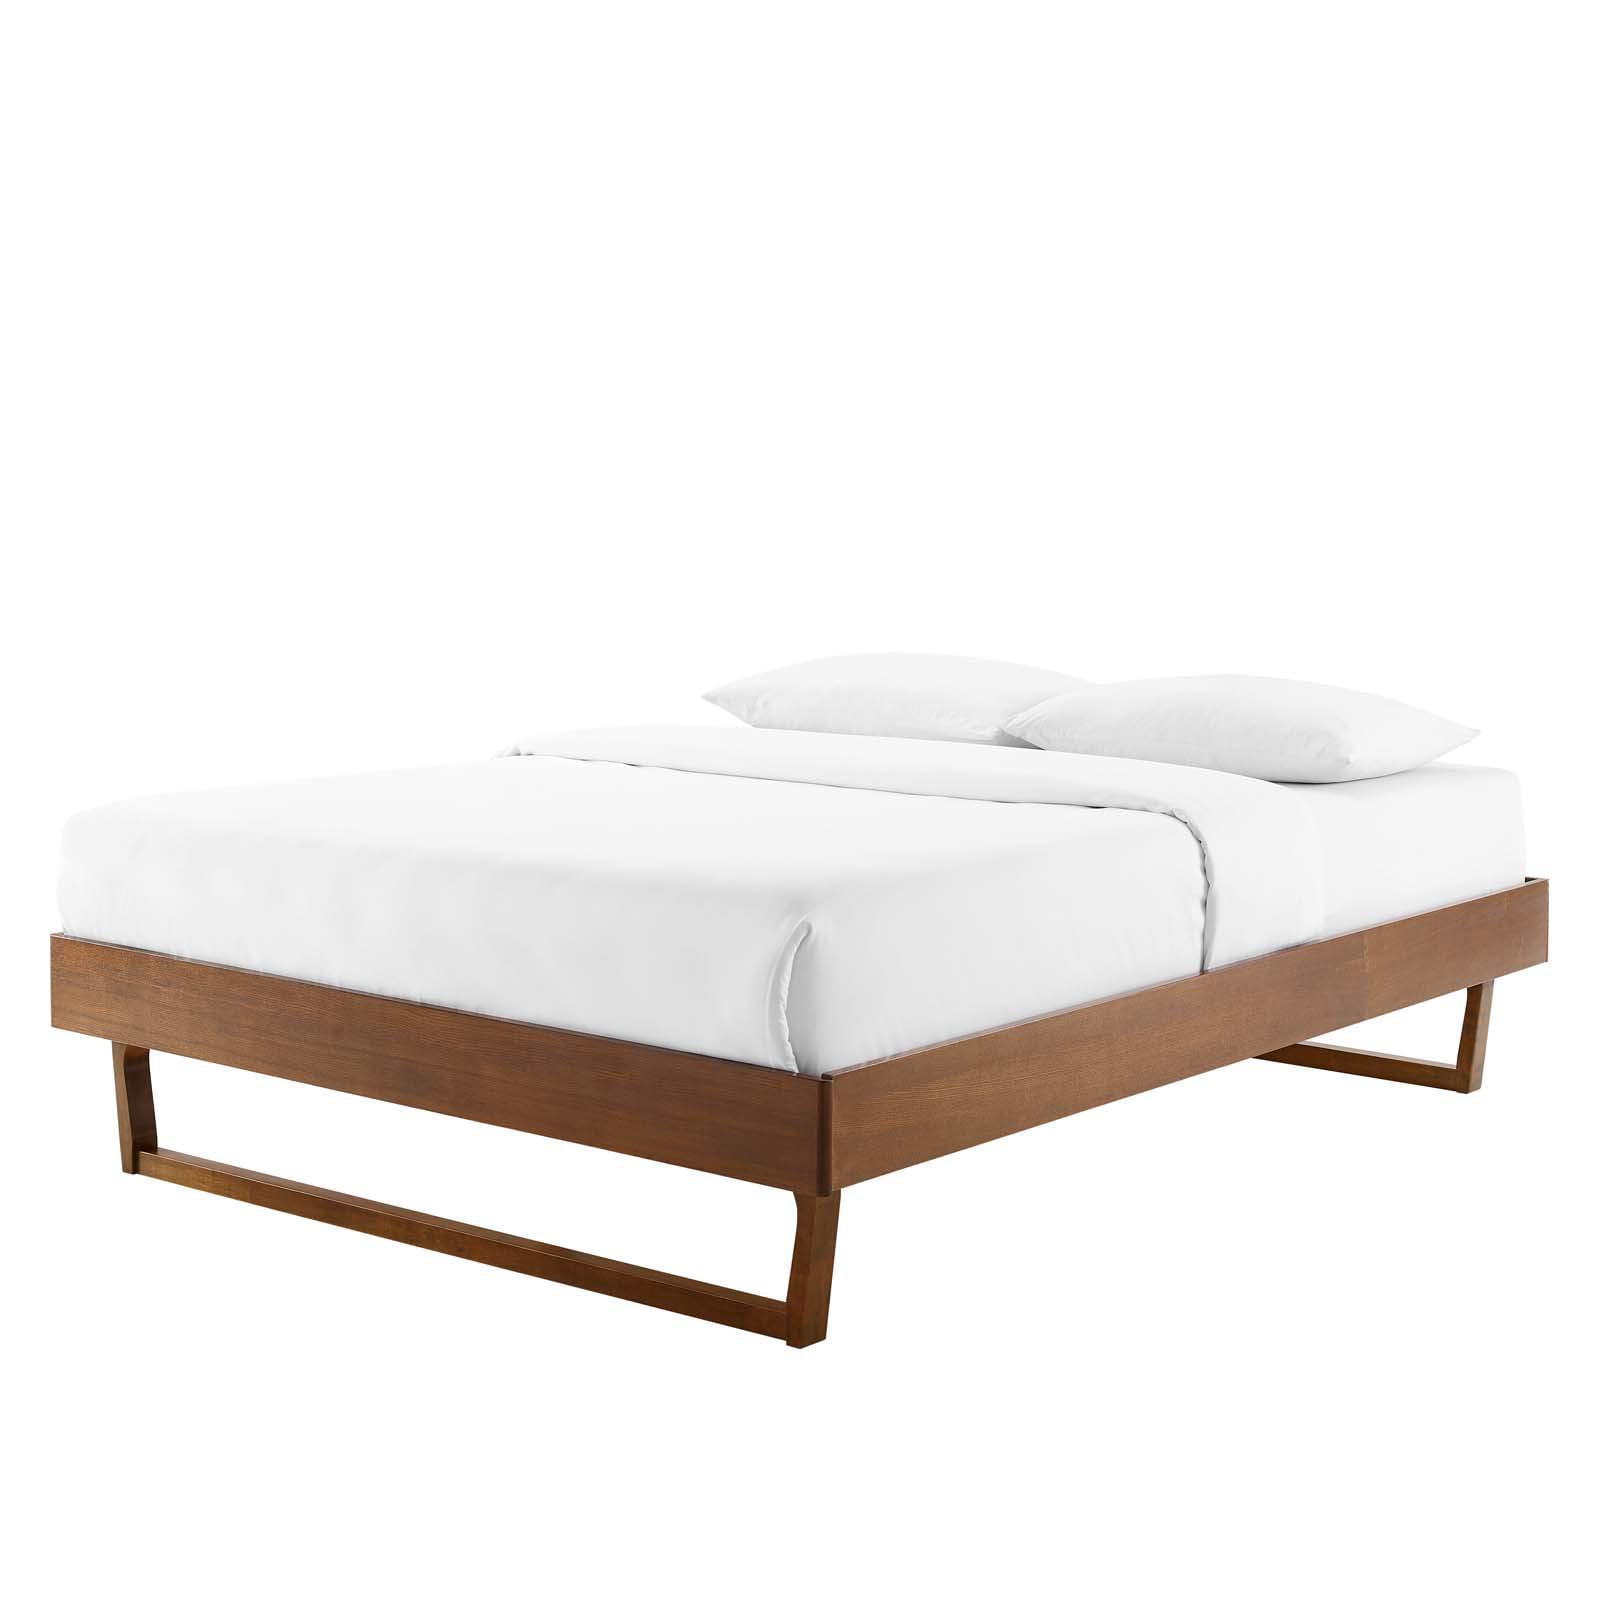 Billie Mid-Century Walnut Wood Full Platform Bed with Headboard